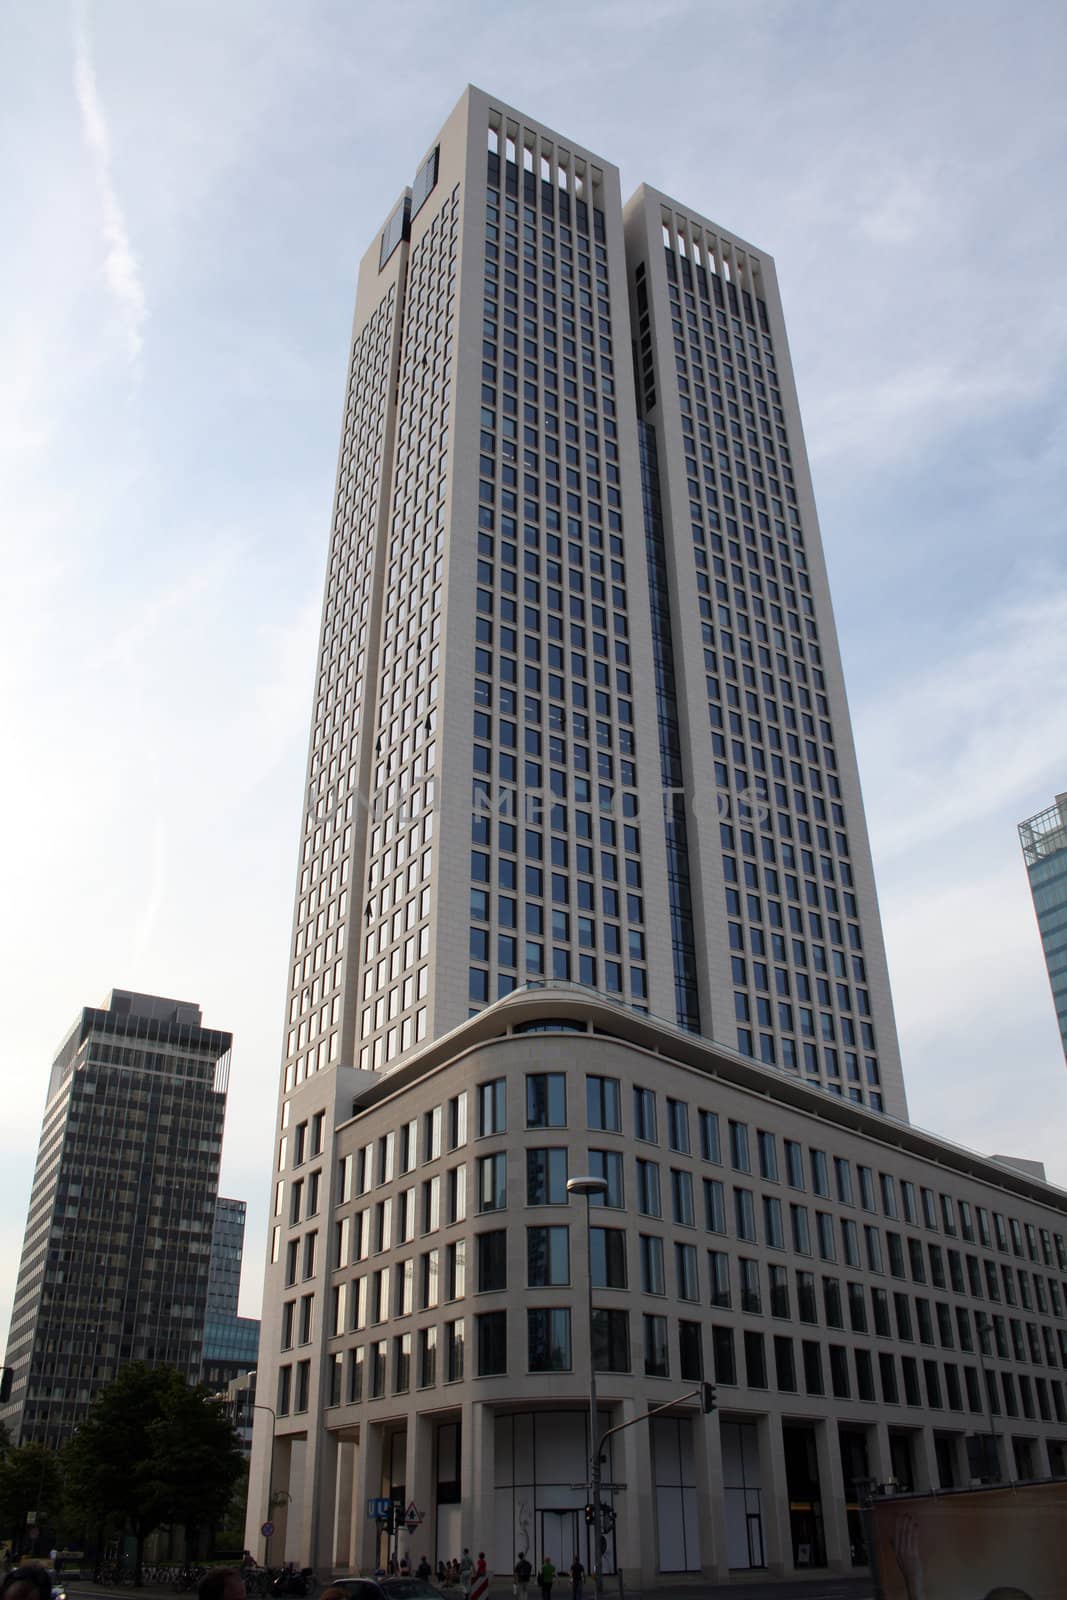 The Opernturm skyscraper in Frankfurt, Hesse, Germany.